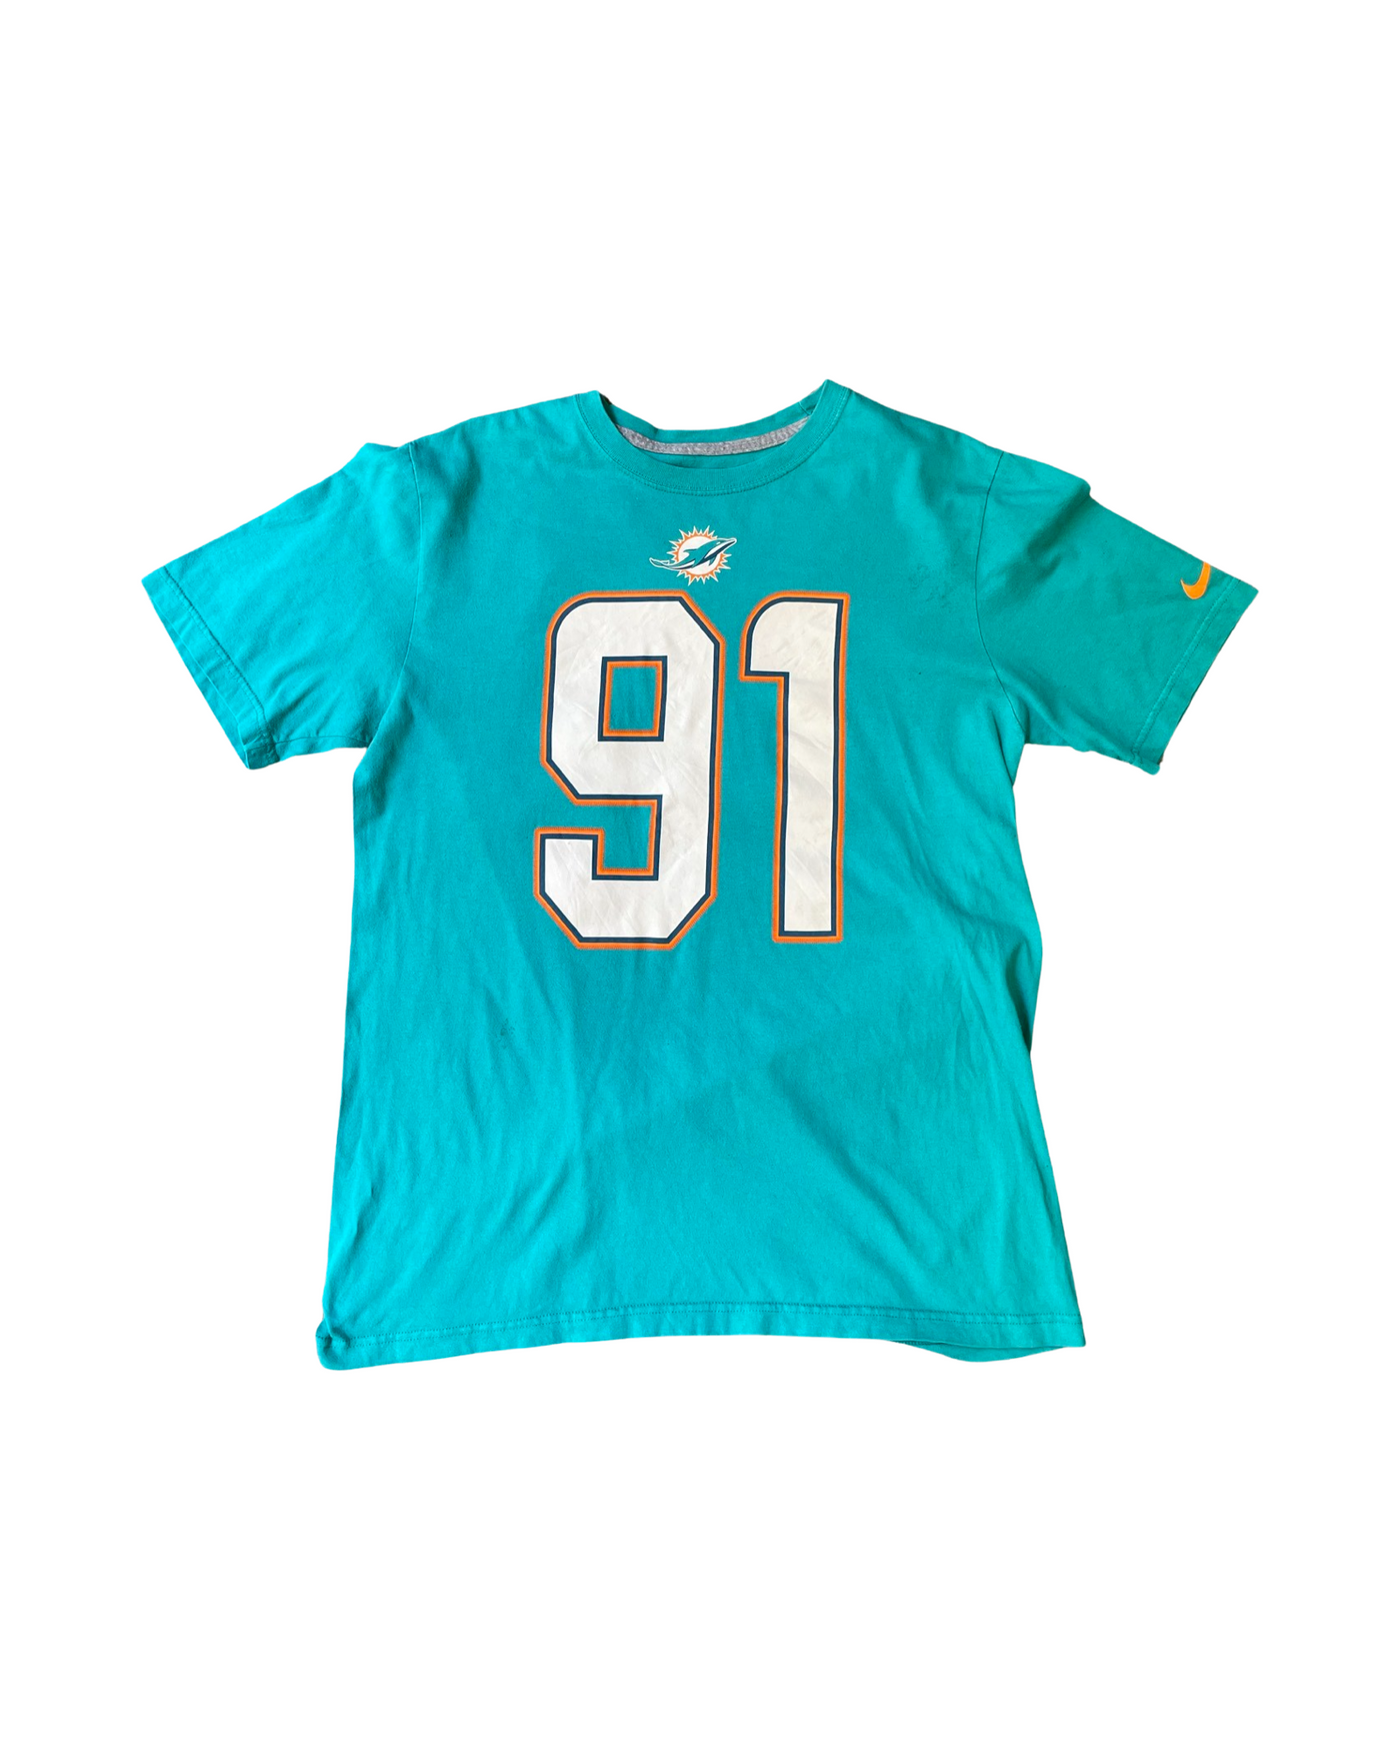 Vintage NFL Miami Dolphins T-Shirt